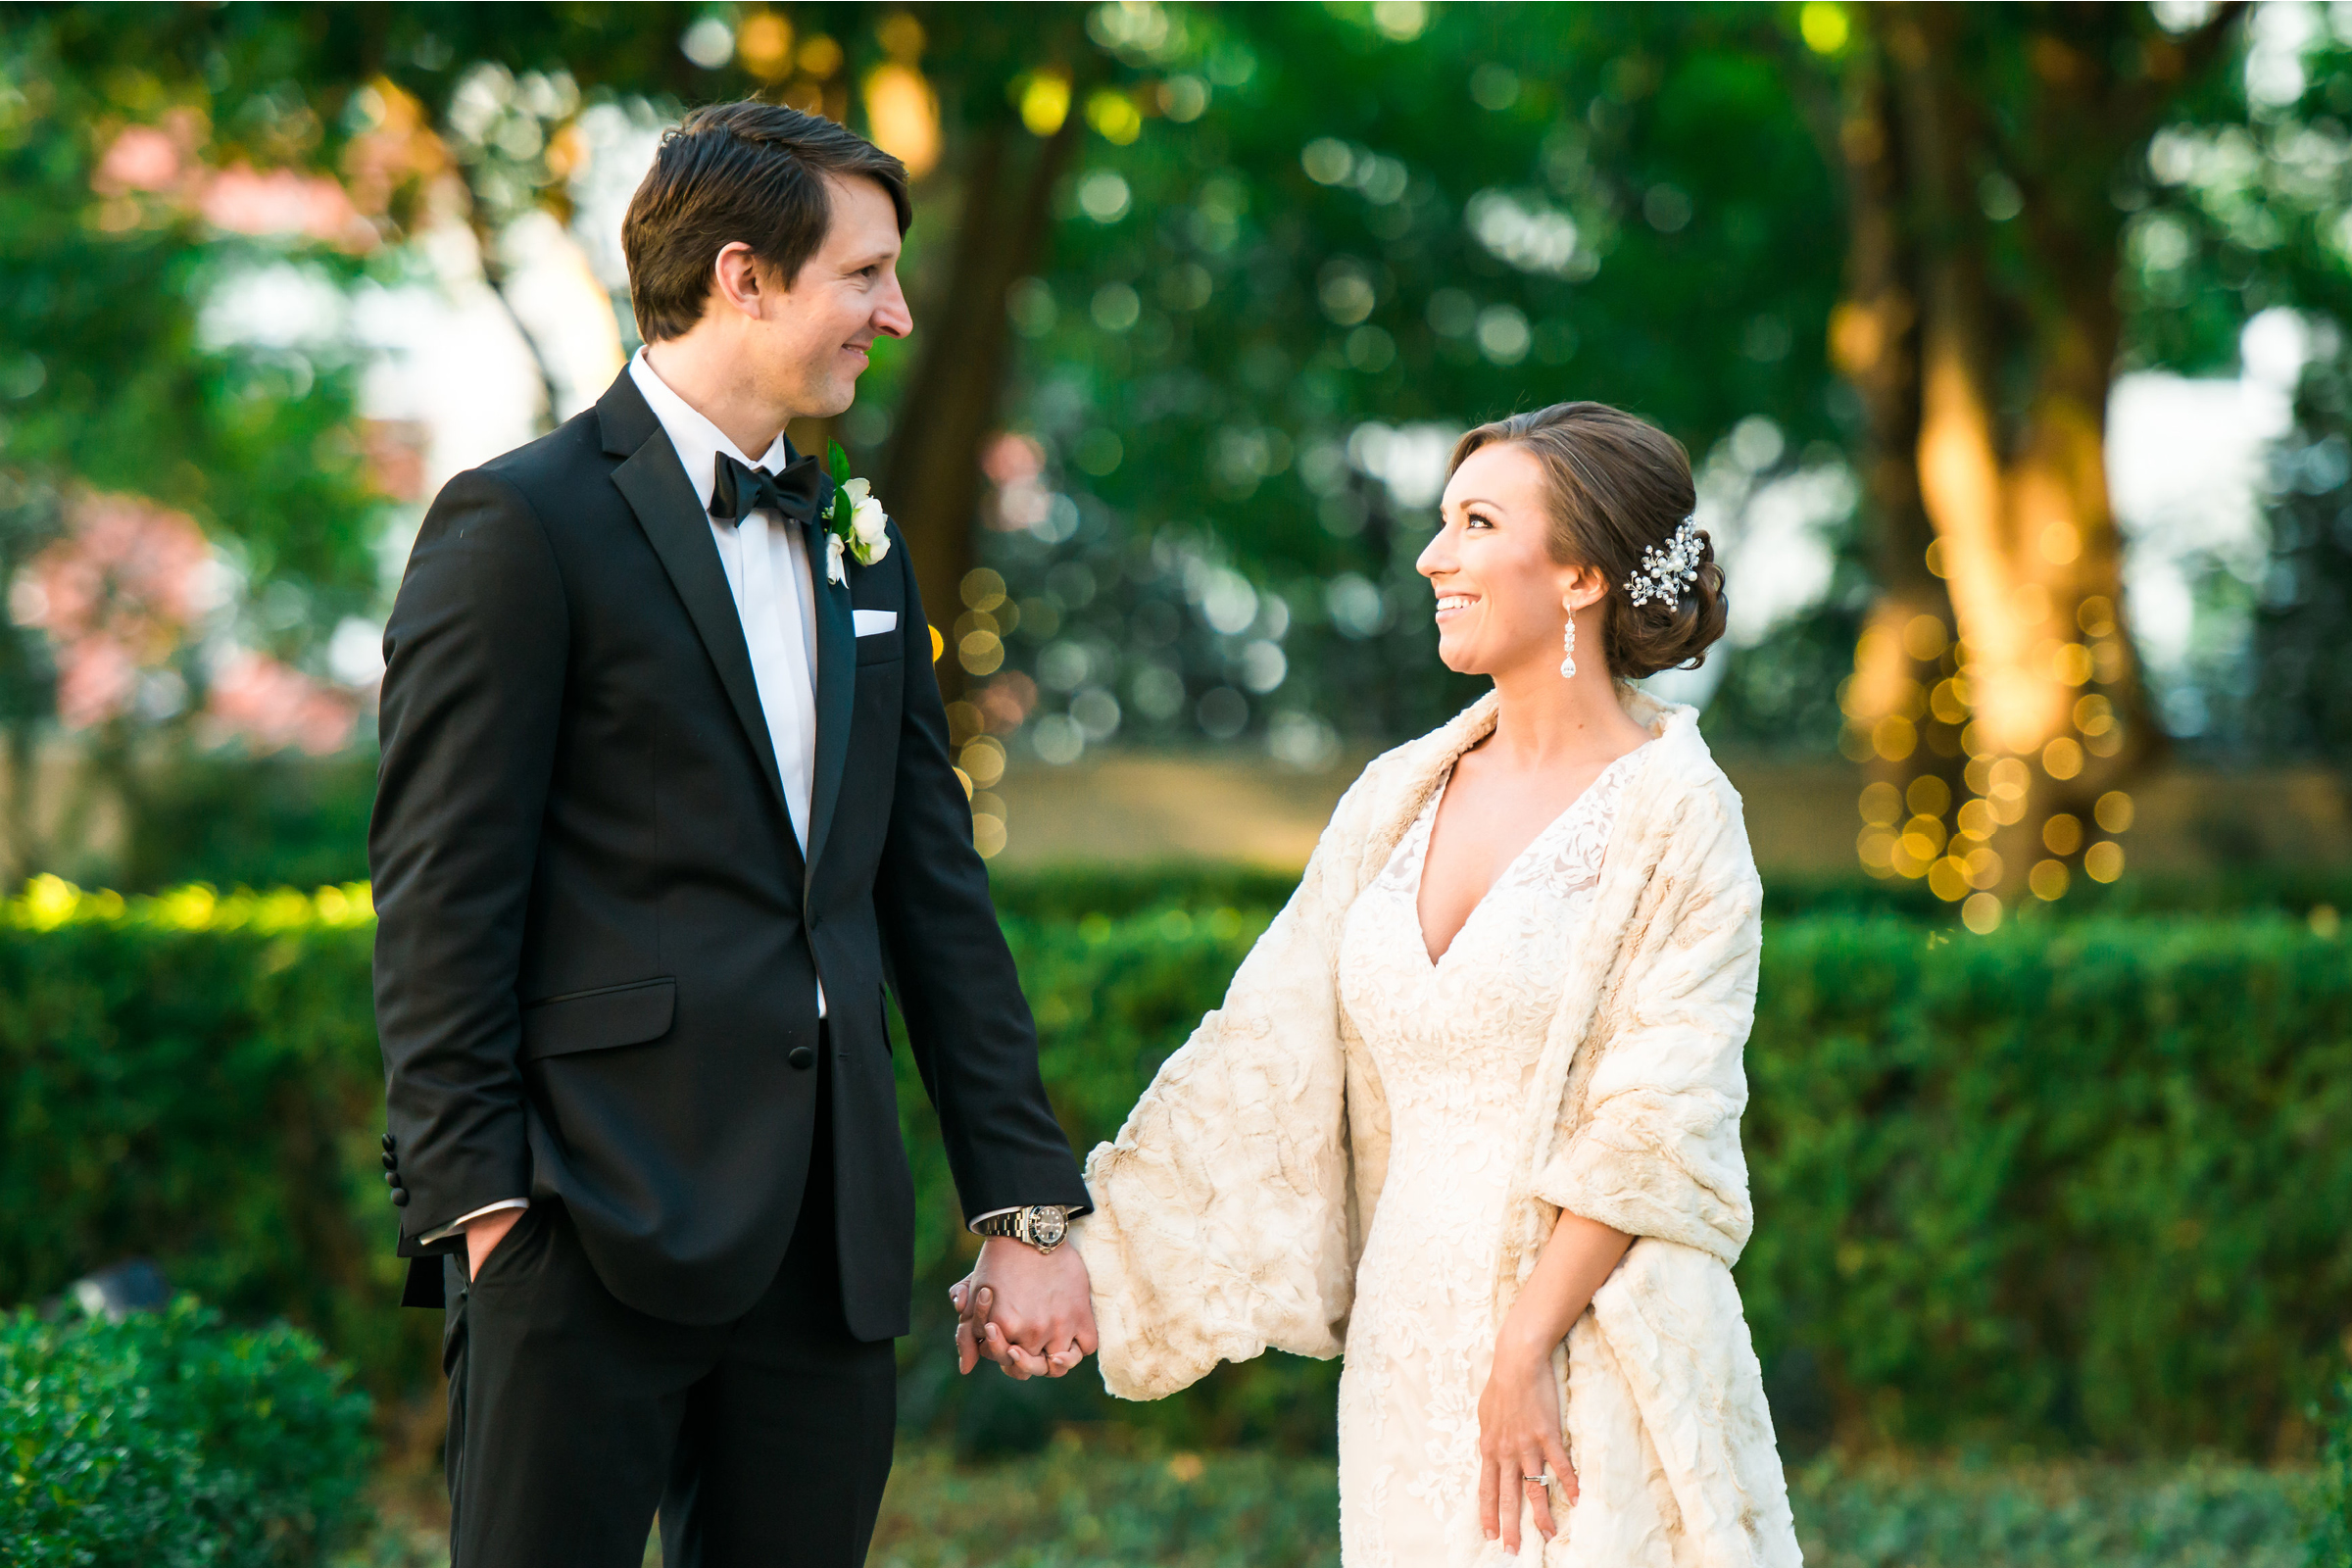 Top Dallas Wedding Planners | A Stylish Soiree